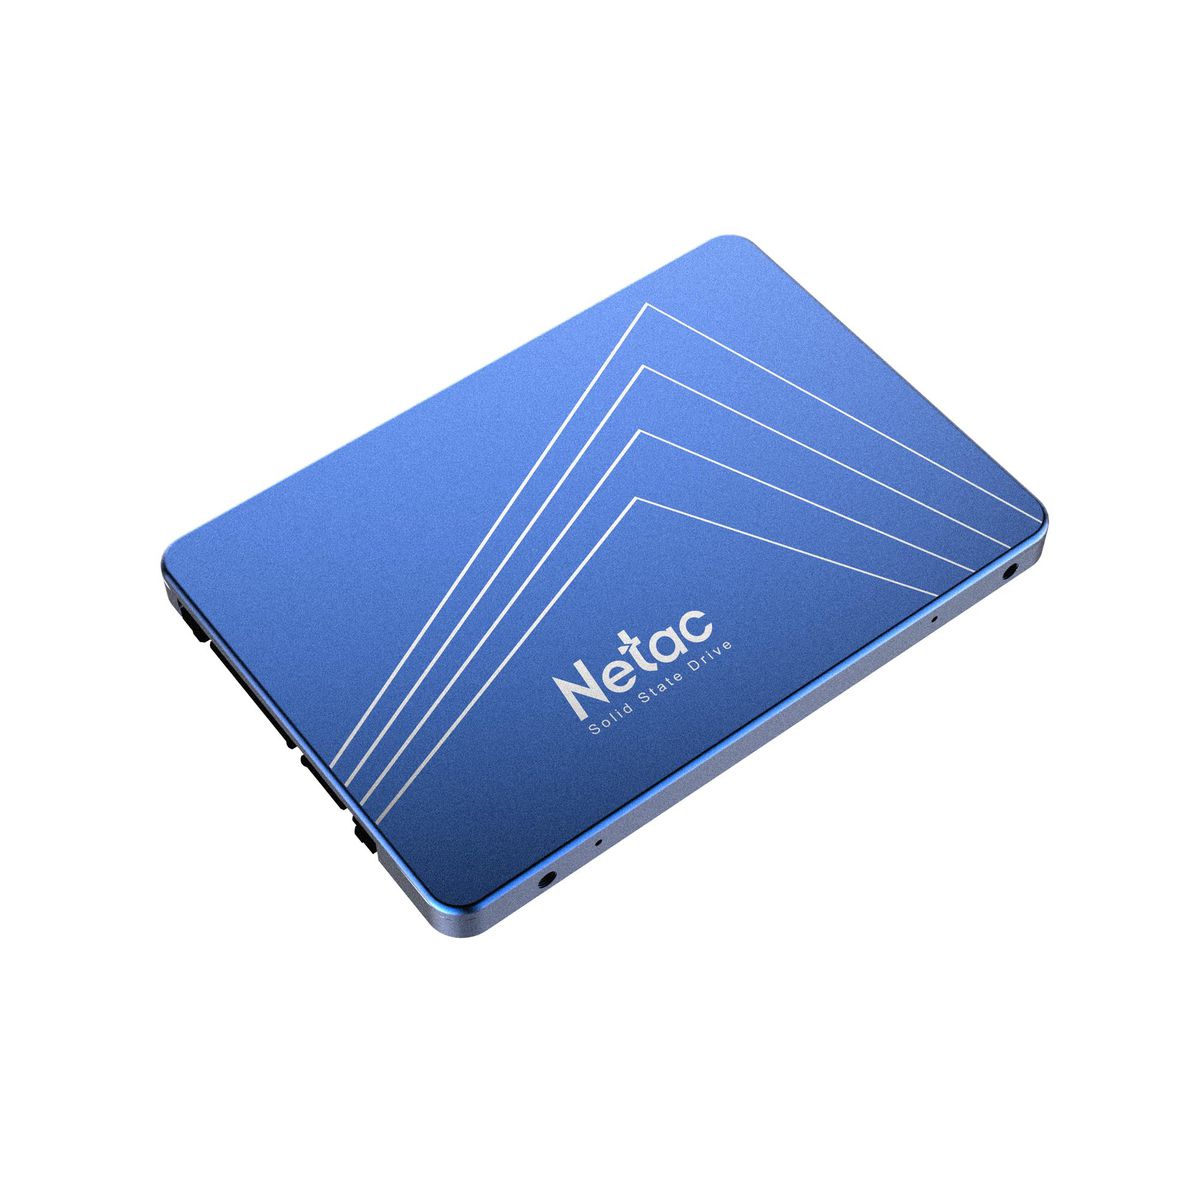 Netac 480GB 2.5' SSD